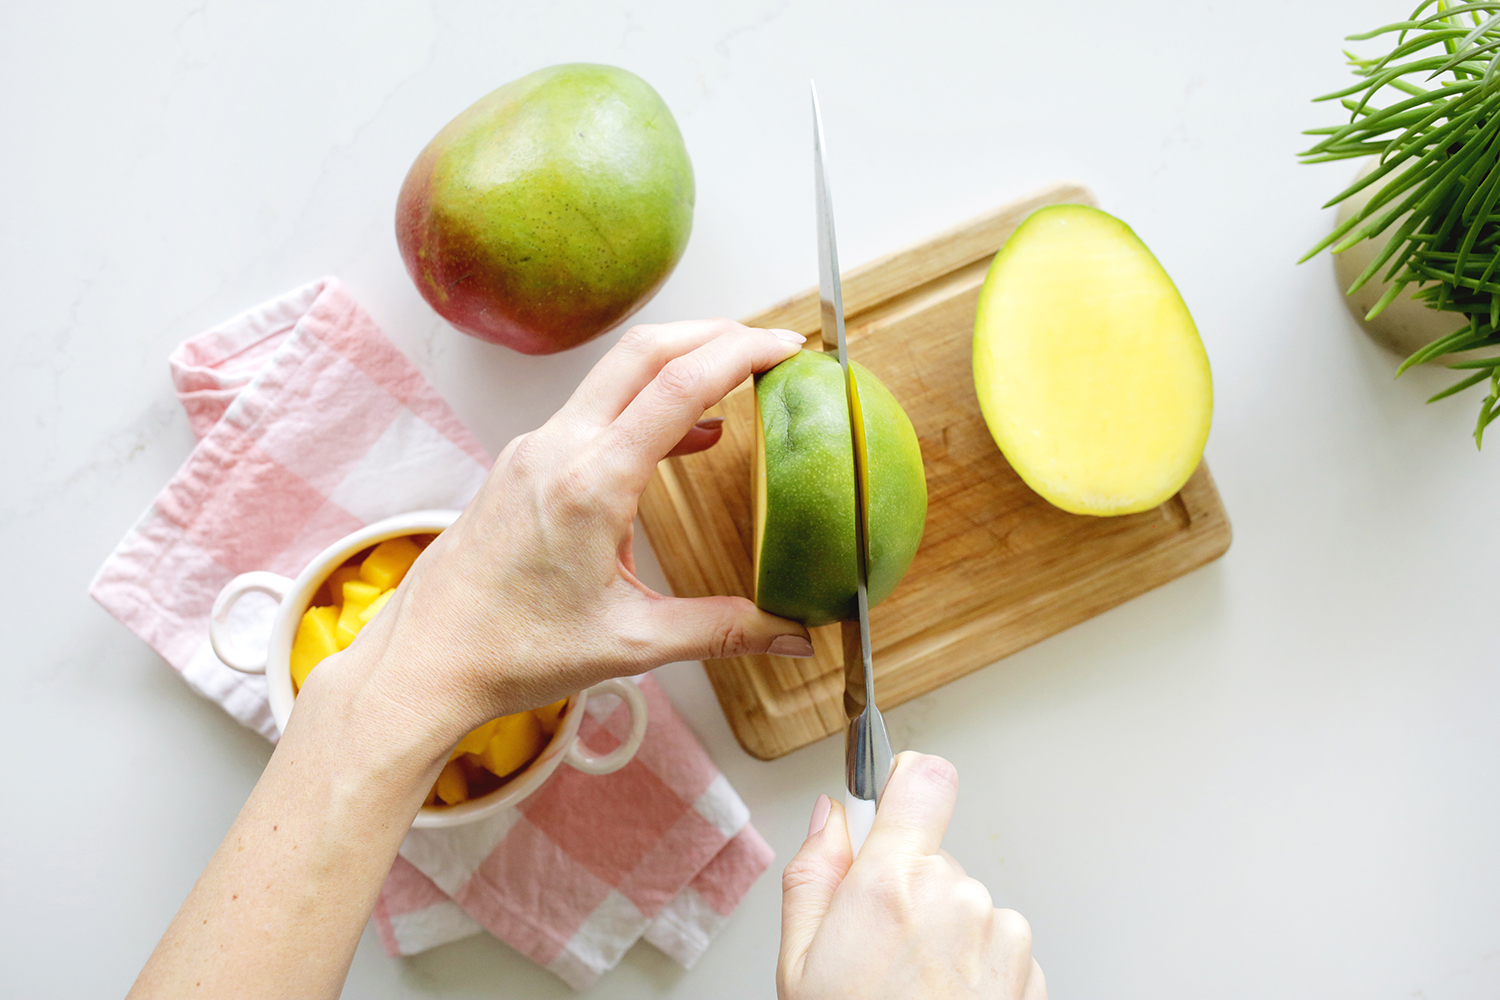 Cutting into mango on cutting board